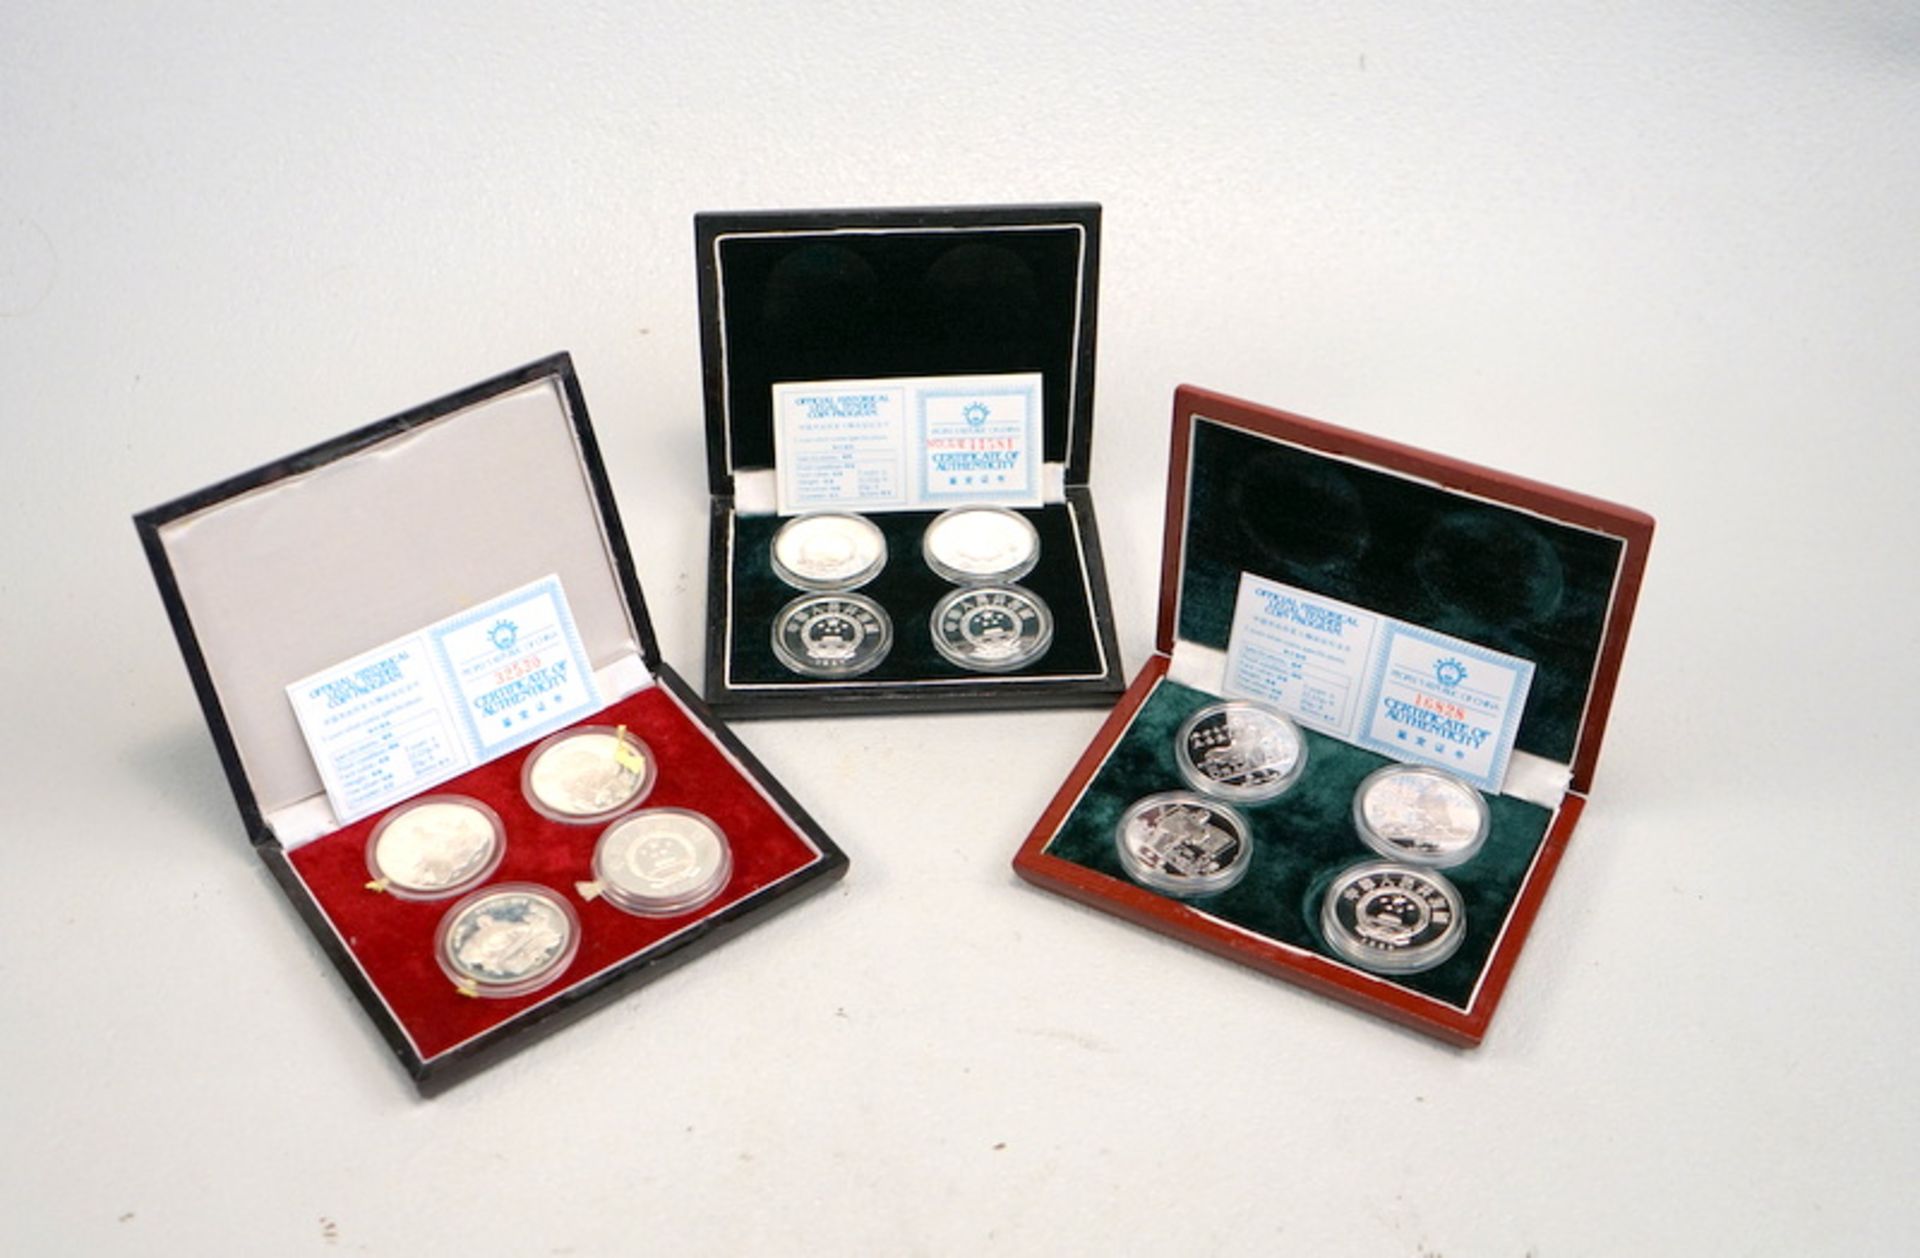 12 Münzen, Silber, China, 5 Yuan, 1986, 1987, 1988,jeweils 4x 1986,1987, 1988, 5 Yuan, Durchmesser